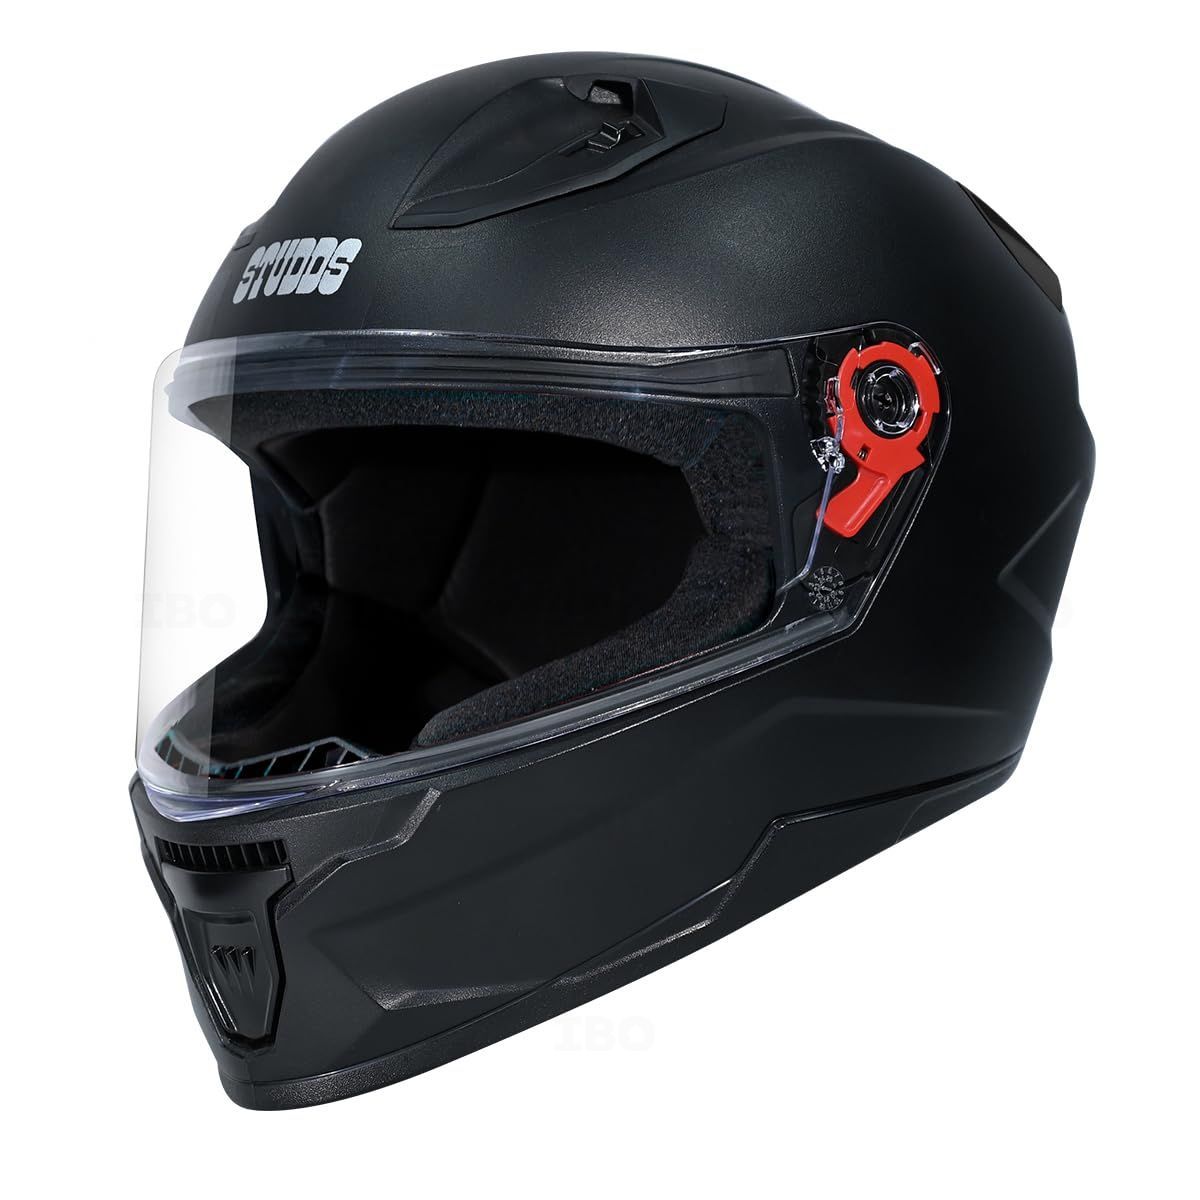 Studds Raider Street Full Face Helmet -XL